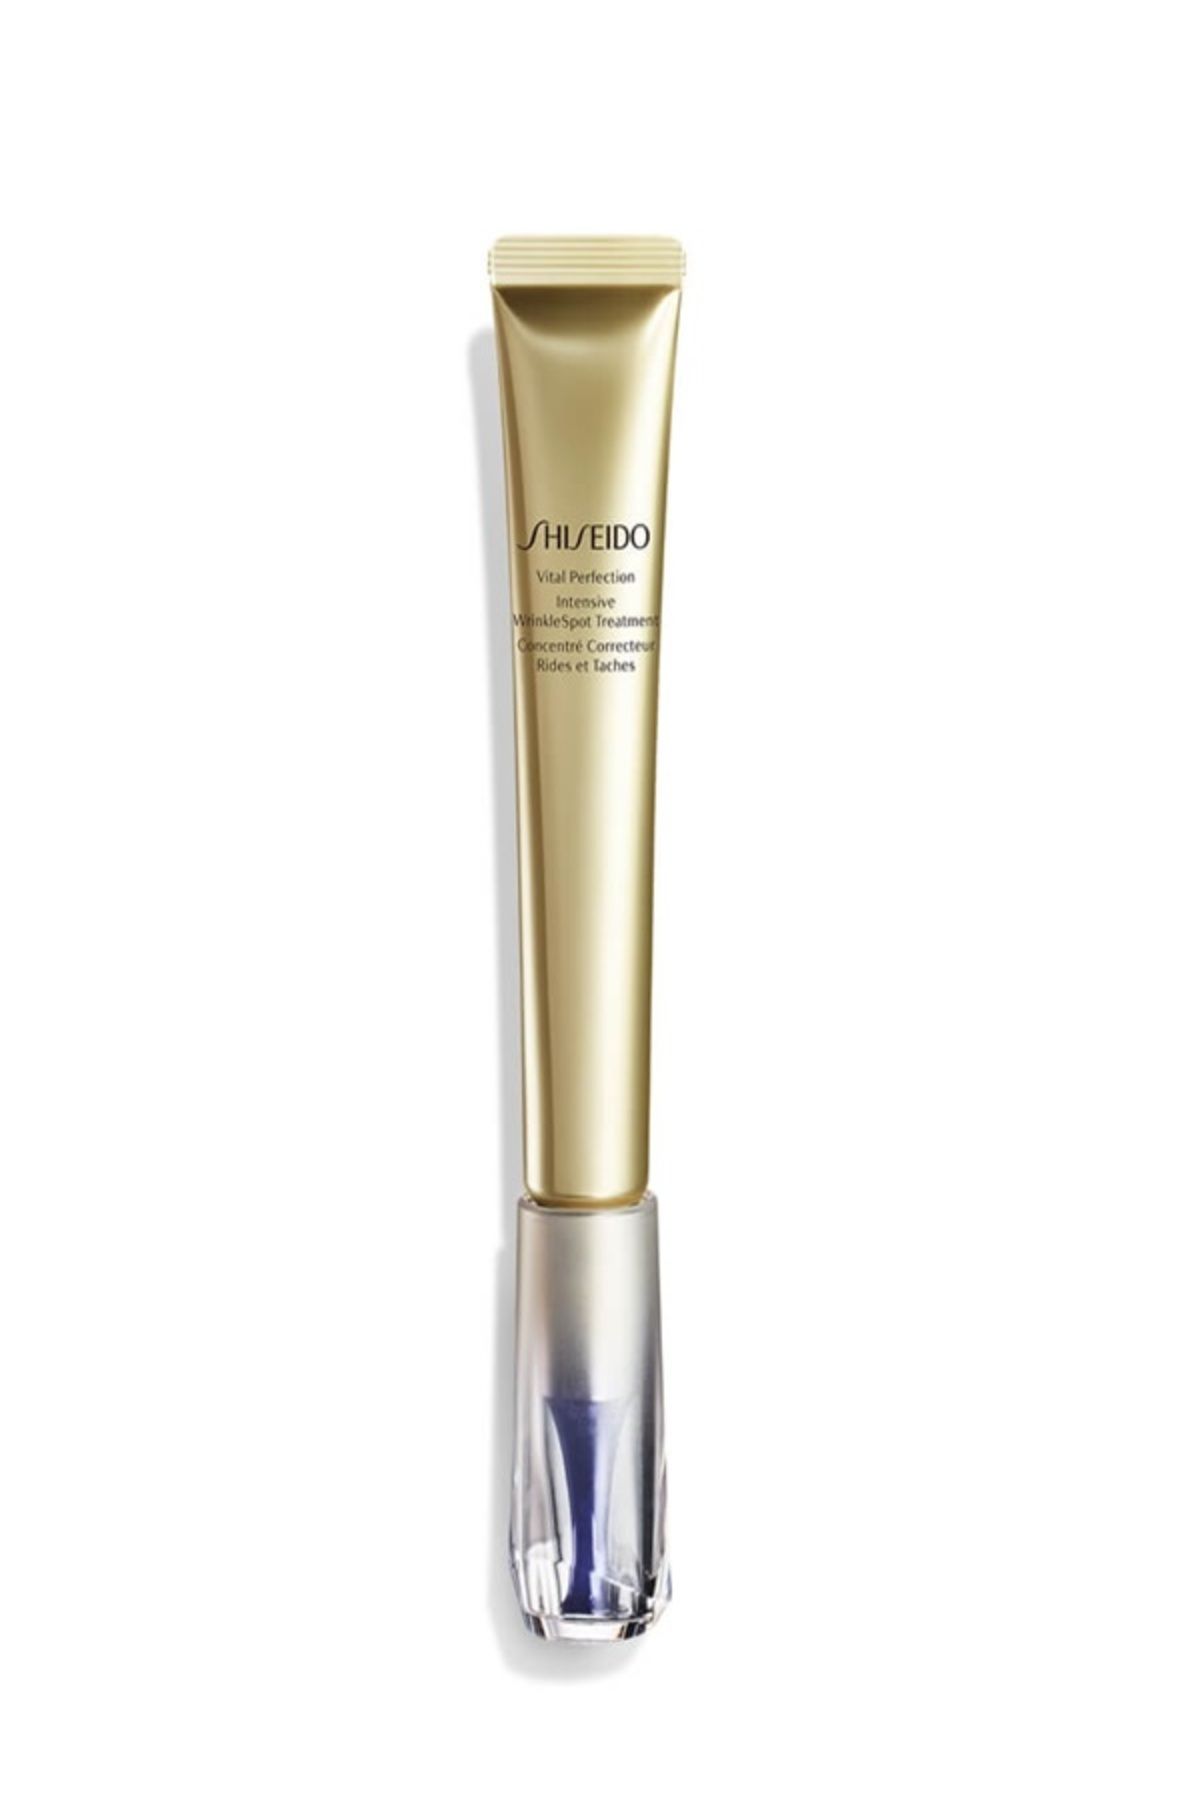 Shiseido Vital Perfection Intensive Wrinklespot-2'si 1 Arada Leke Yaşlanma Karşıtı Retinol İçerikli Krem 20ml